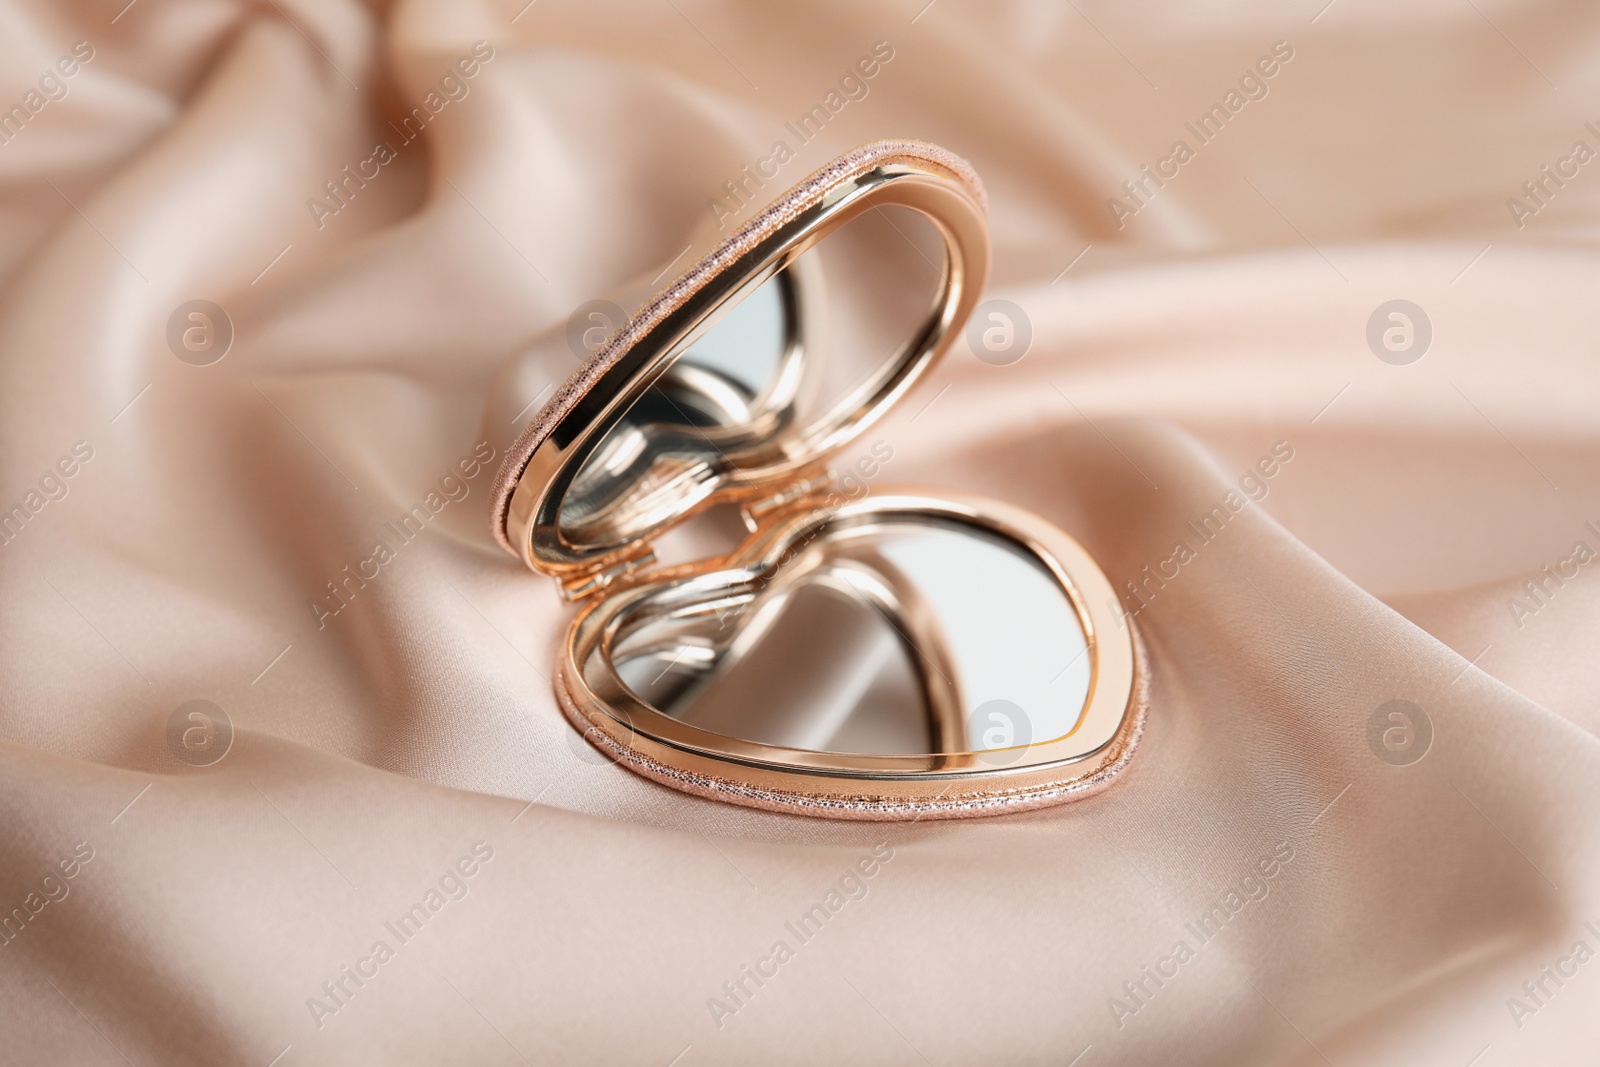 Photo of Stylish heart shaped cosmetic pocket mirror on rose gold fabric